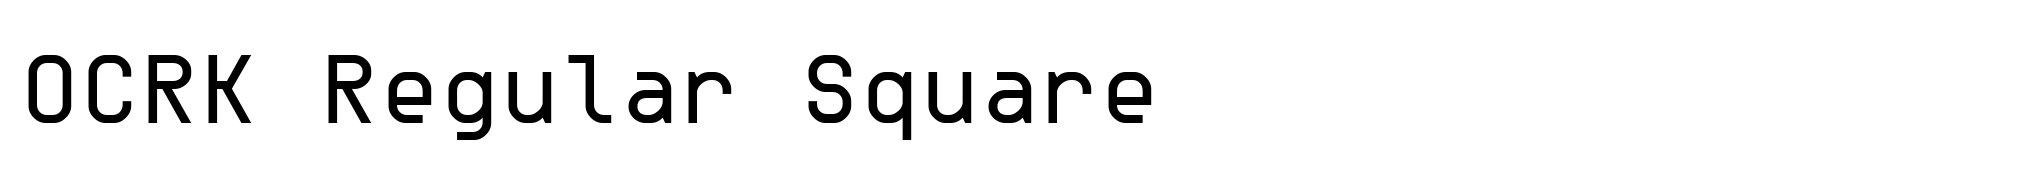 OCRK Regular Square image